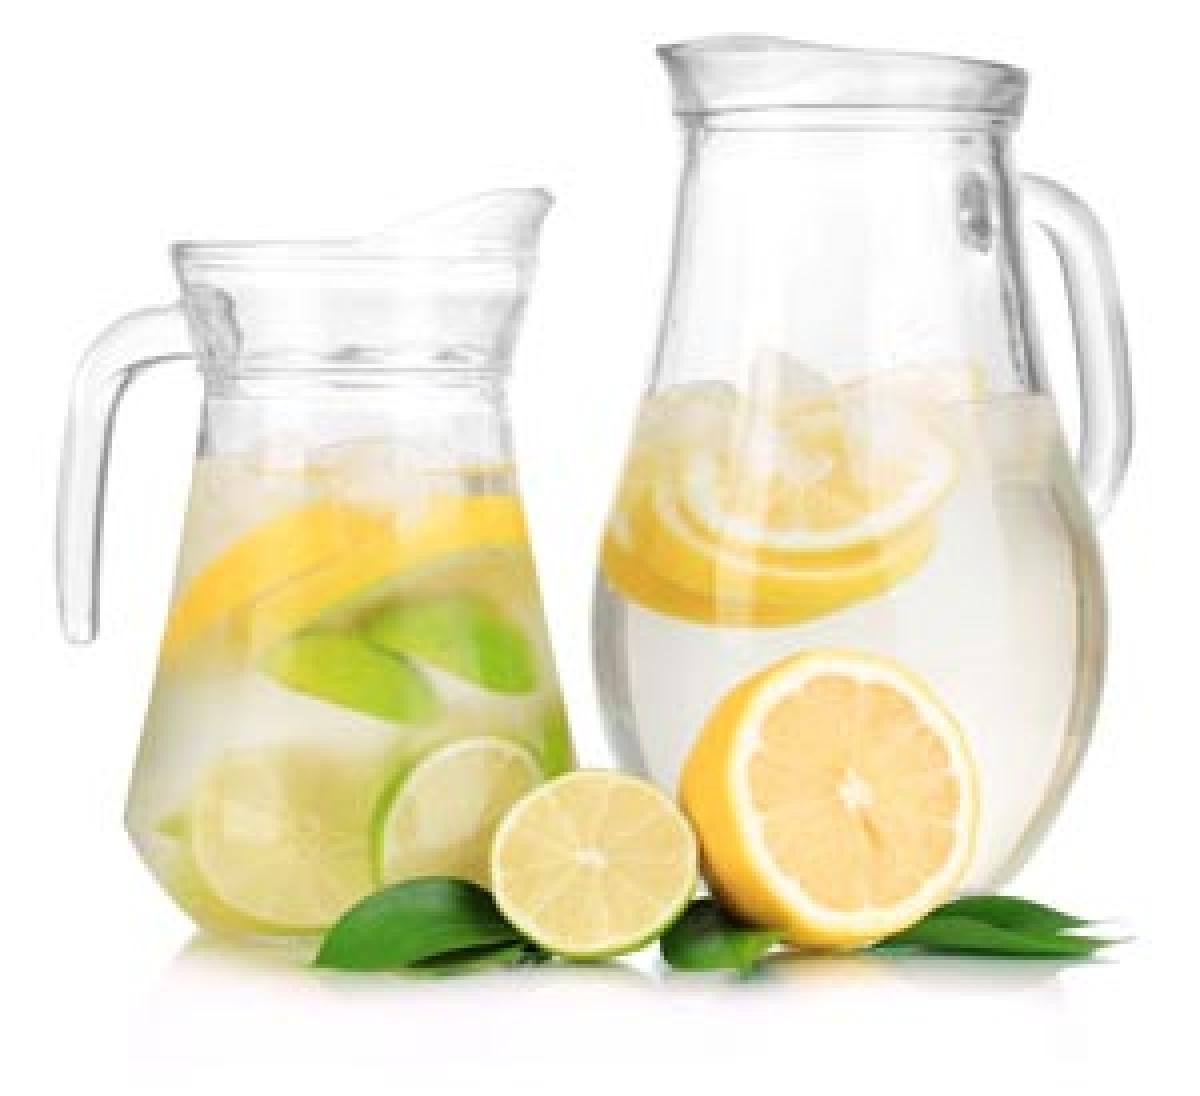 Benefits of drinking hot lemon water